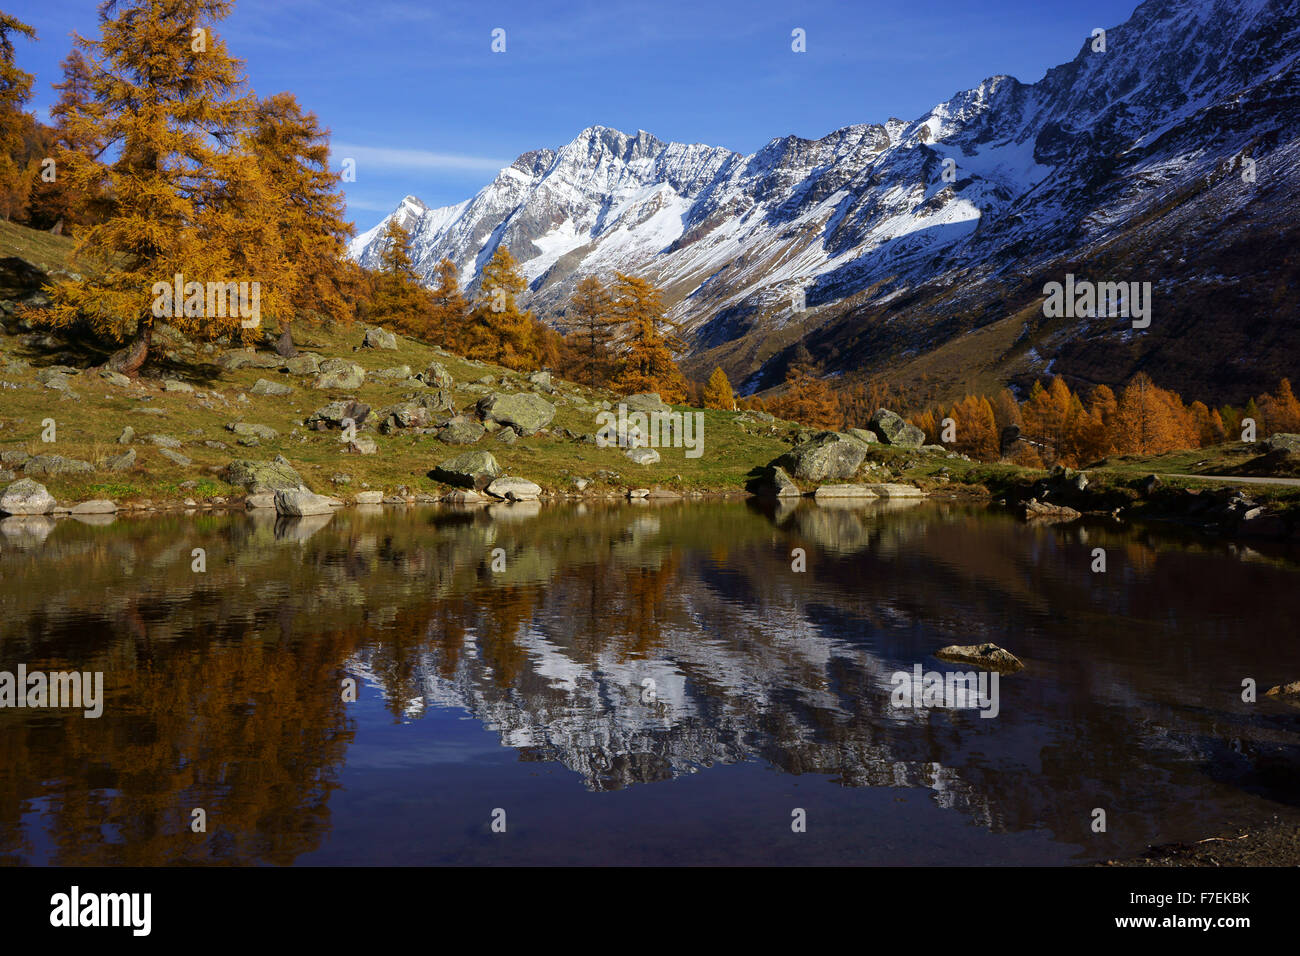 Fafleralp in Lötschental with mountains reflecting in pond, autumn, Valais alps, Switzerland Stock Photo